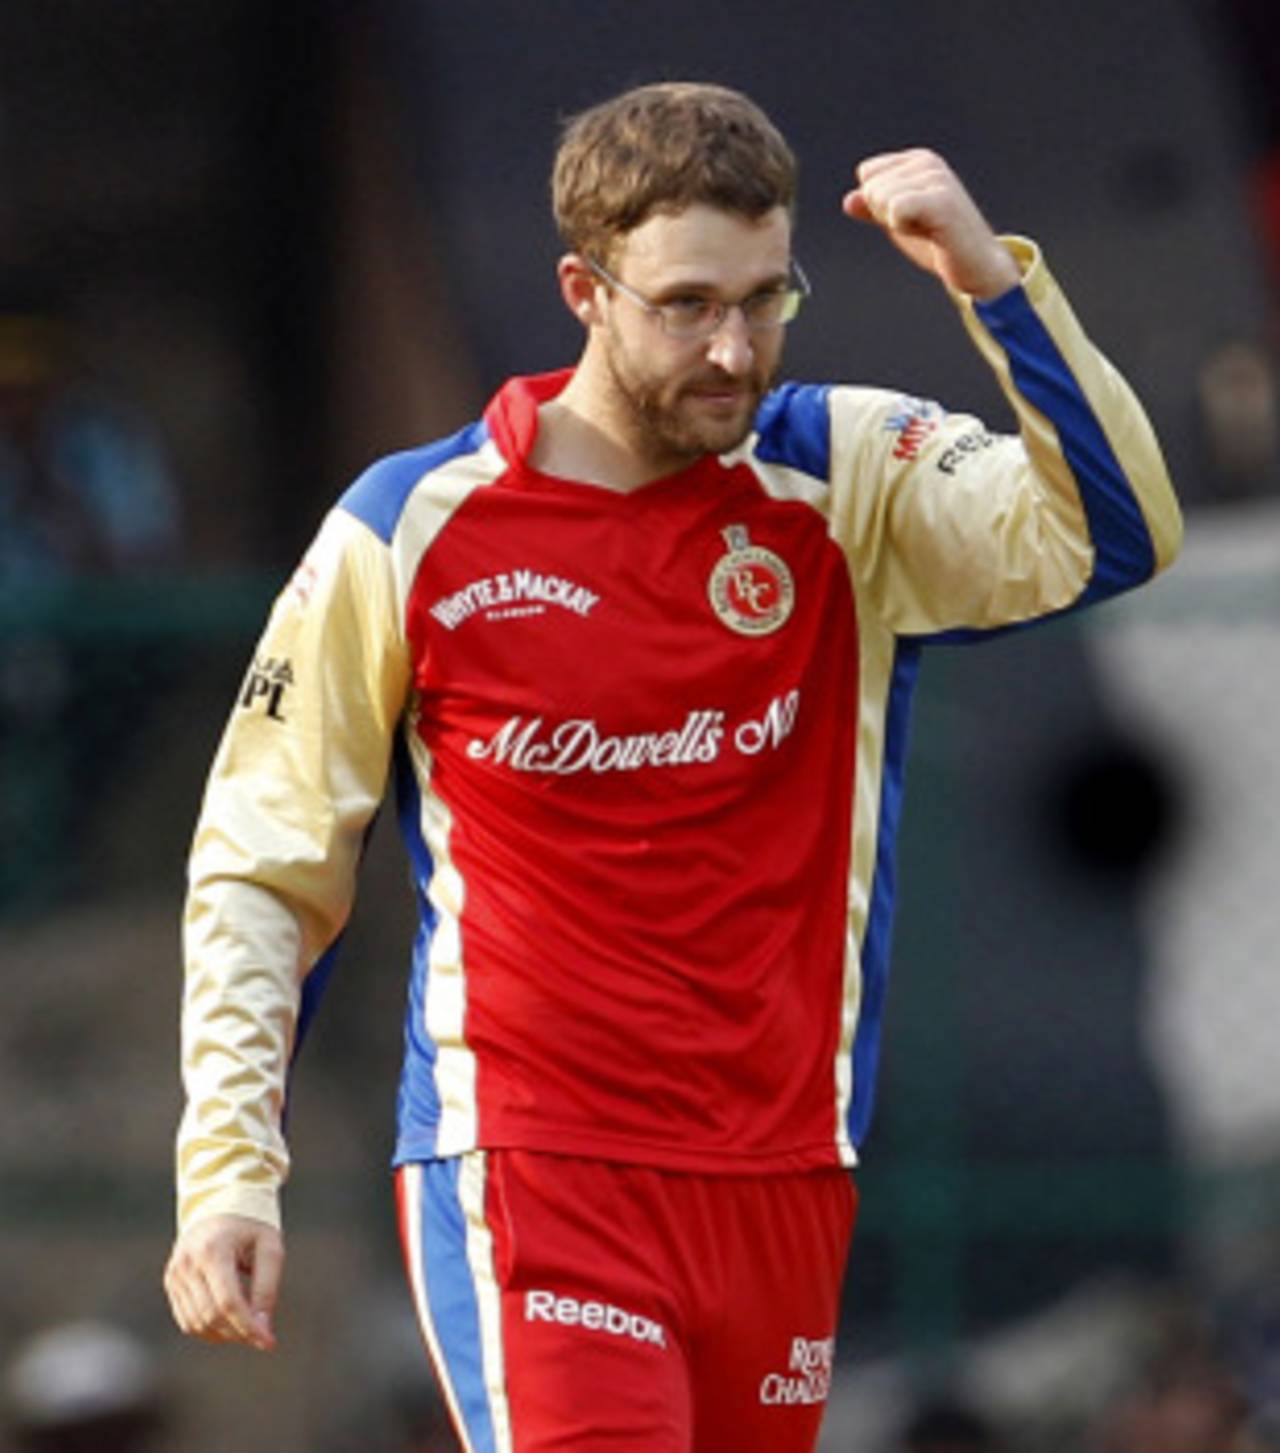 Daniel Vettori reacts after dismissing Dwayne  Bravo, Royal Challengers Bangalore v Chennai Super Kings, IPL 2011, Bangalore, May 22, 2011